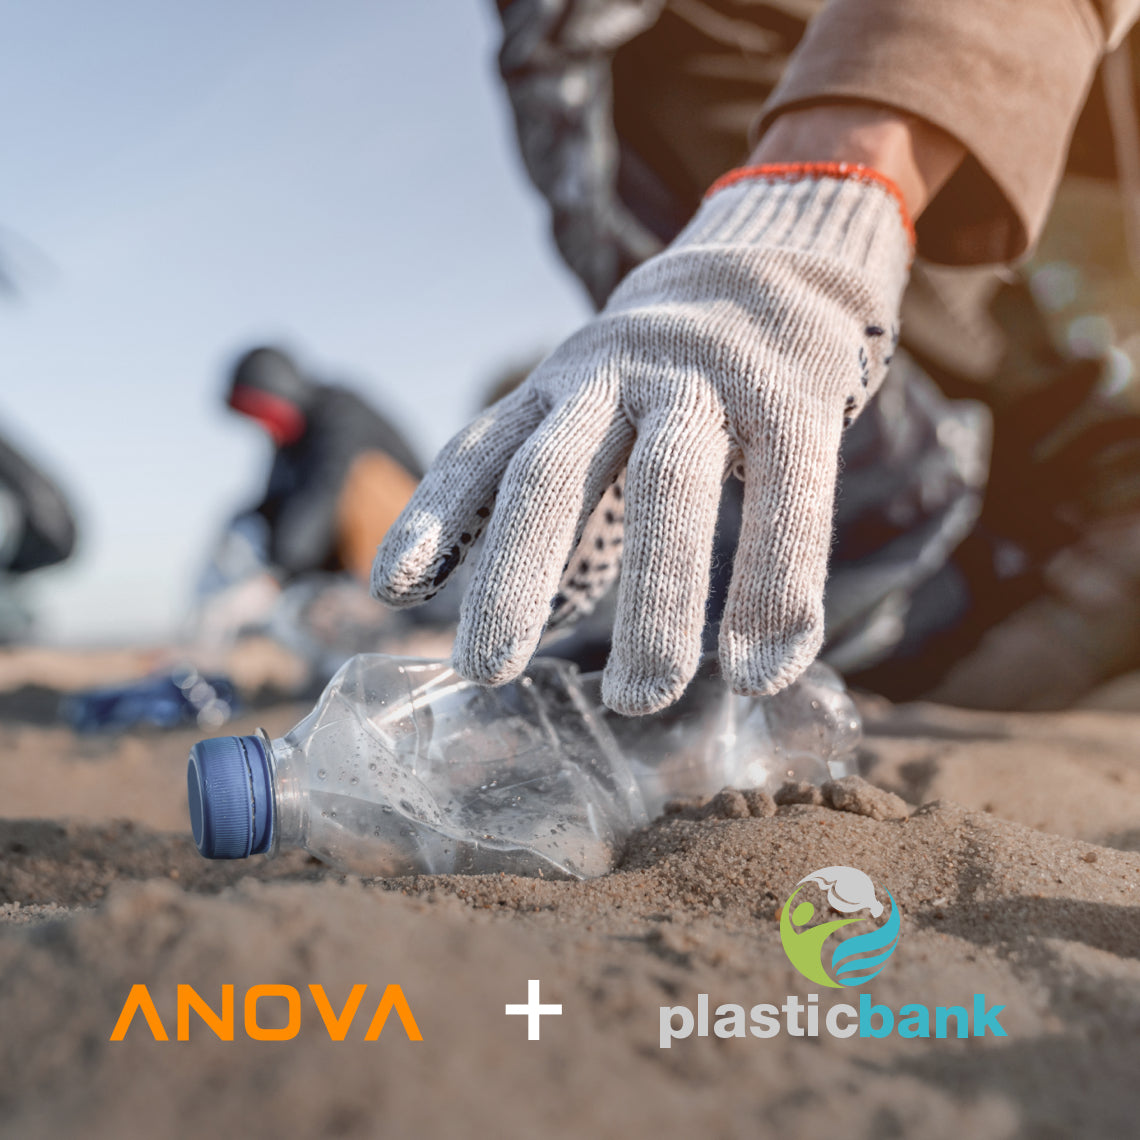 Sous-Vide Vacuum Sealer Bags Prevent Ocean-Debris Plastic